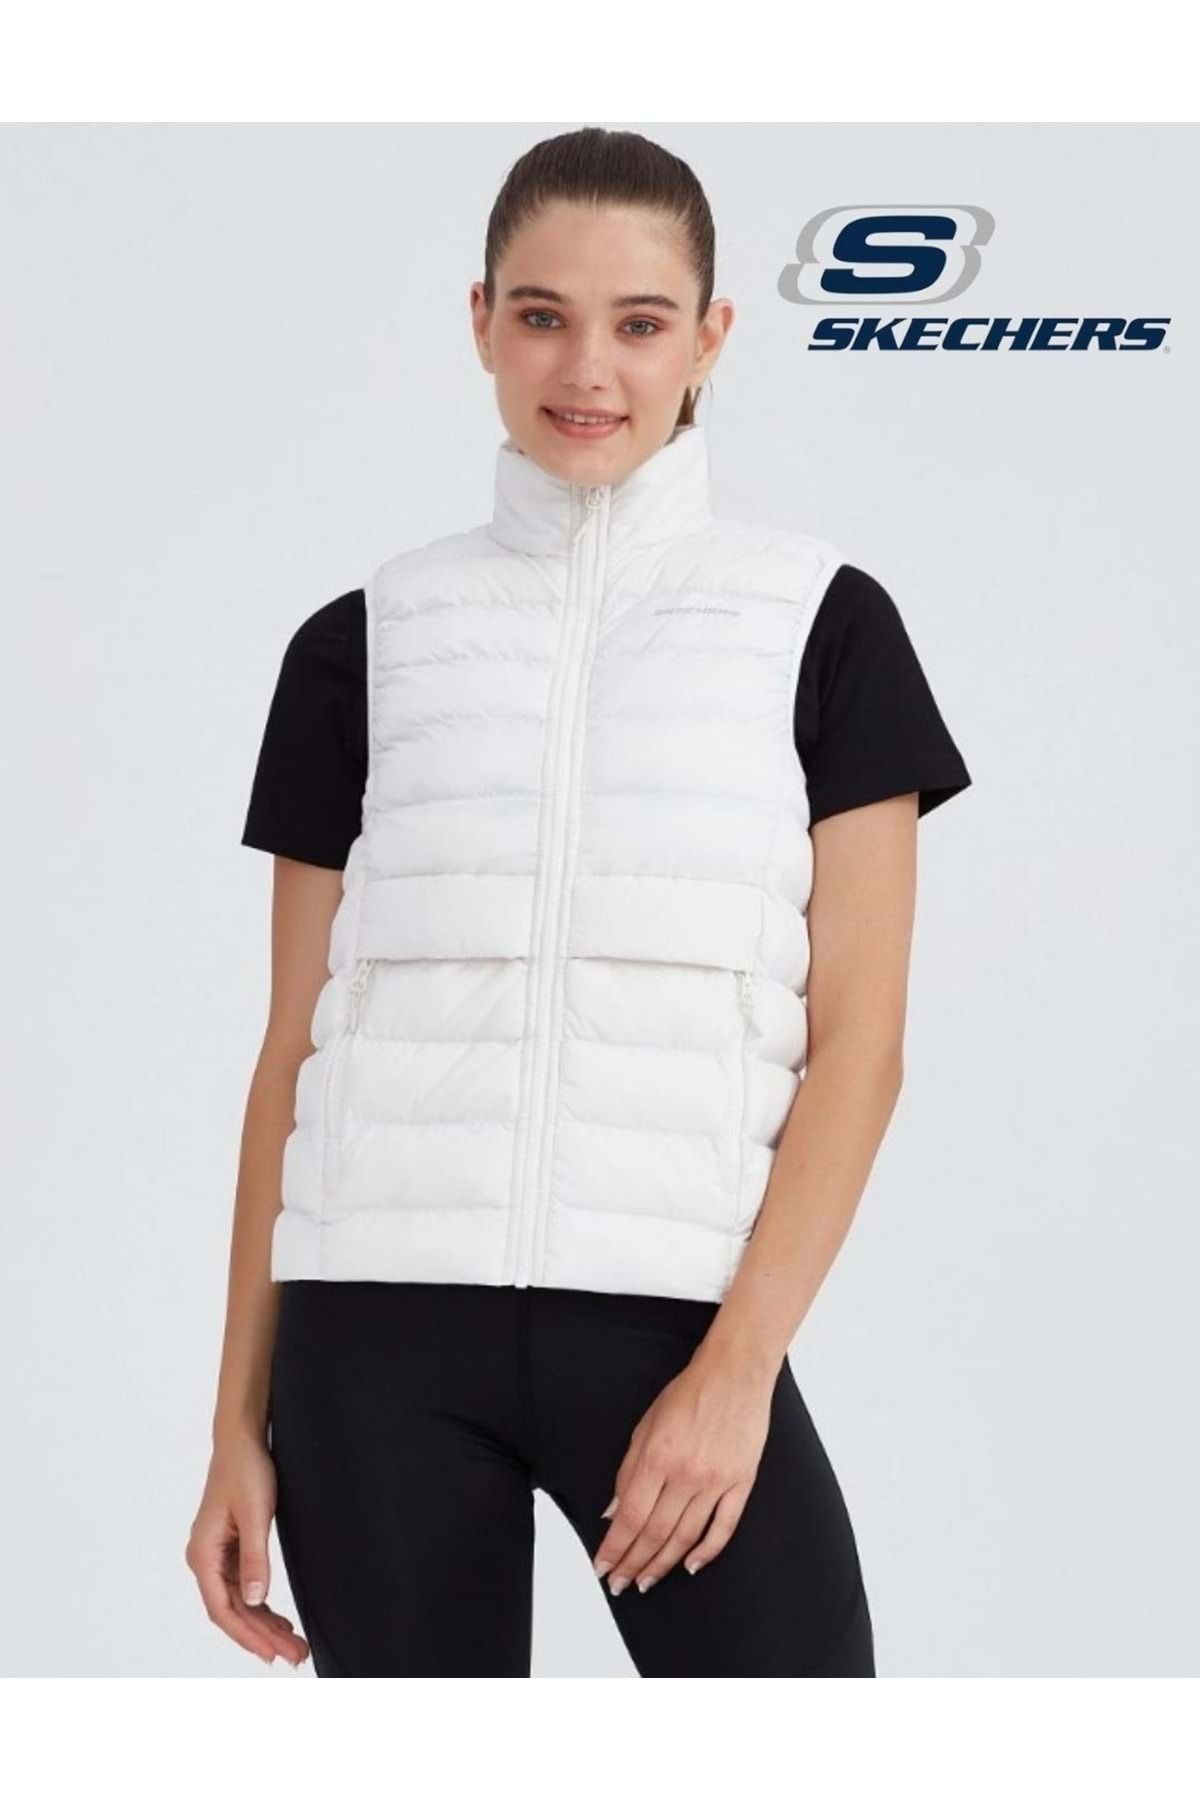 Skechers W Outerwear Padded Vest S231239-001 Kadın Yelek BEYAZ